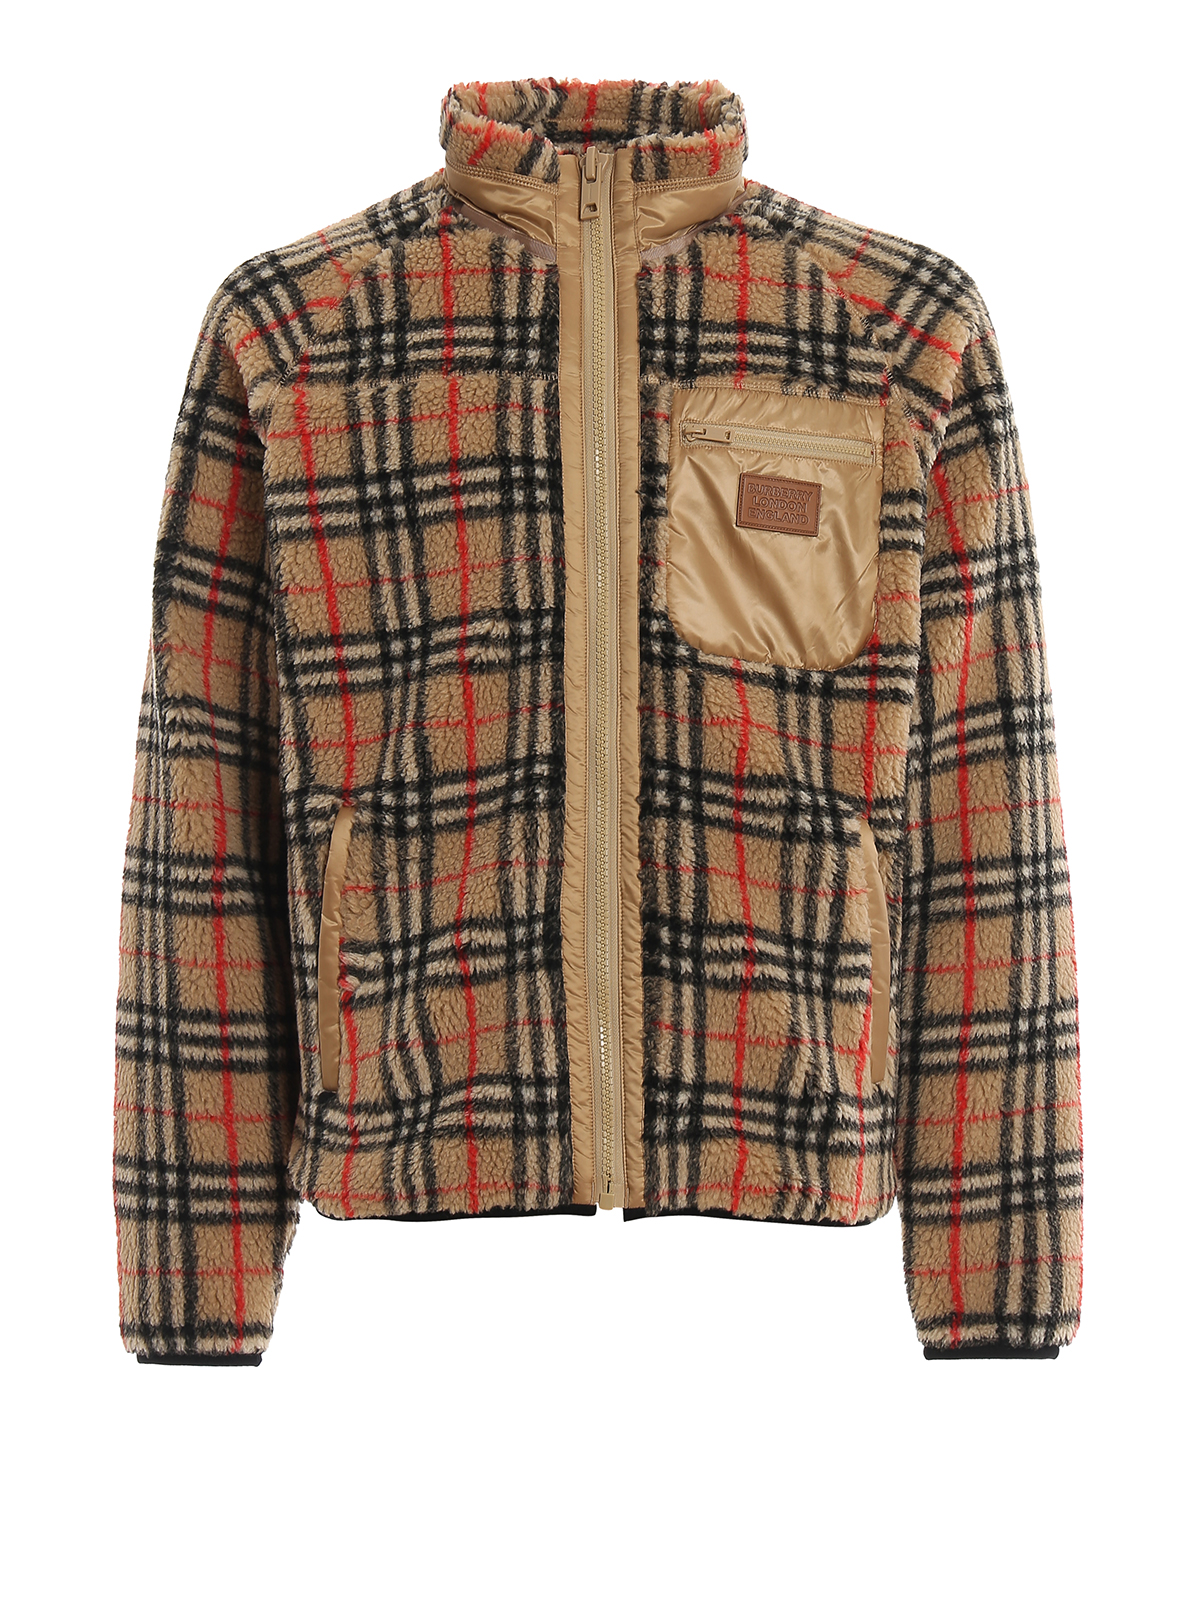 Burberry Fleece Jacket Flash Sales, 56% OFF | www.ingeniovirtual.com